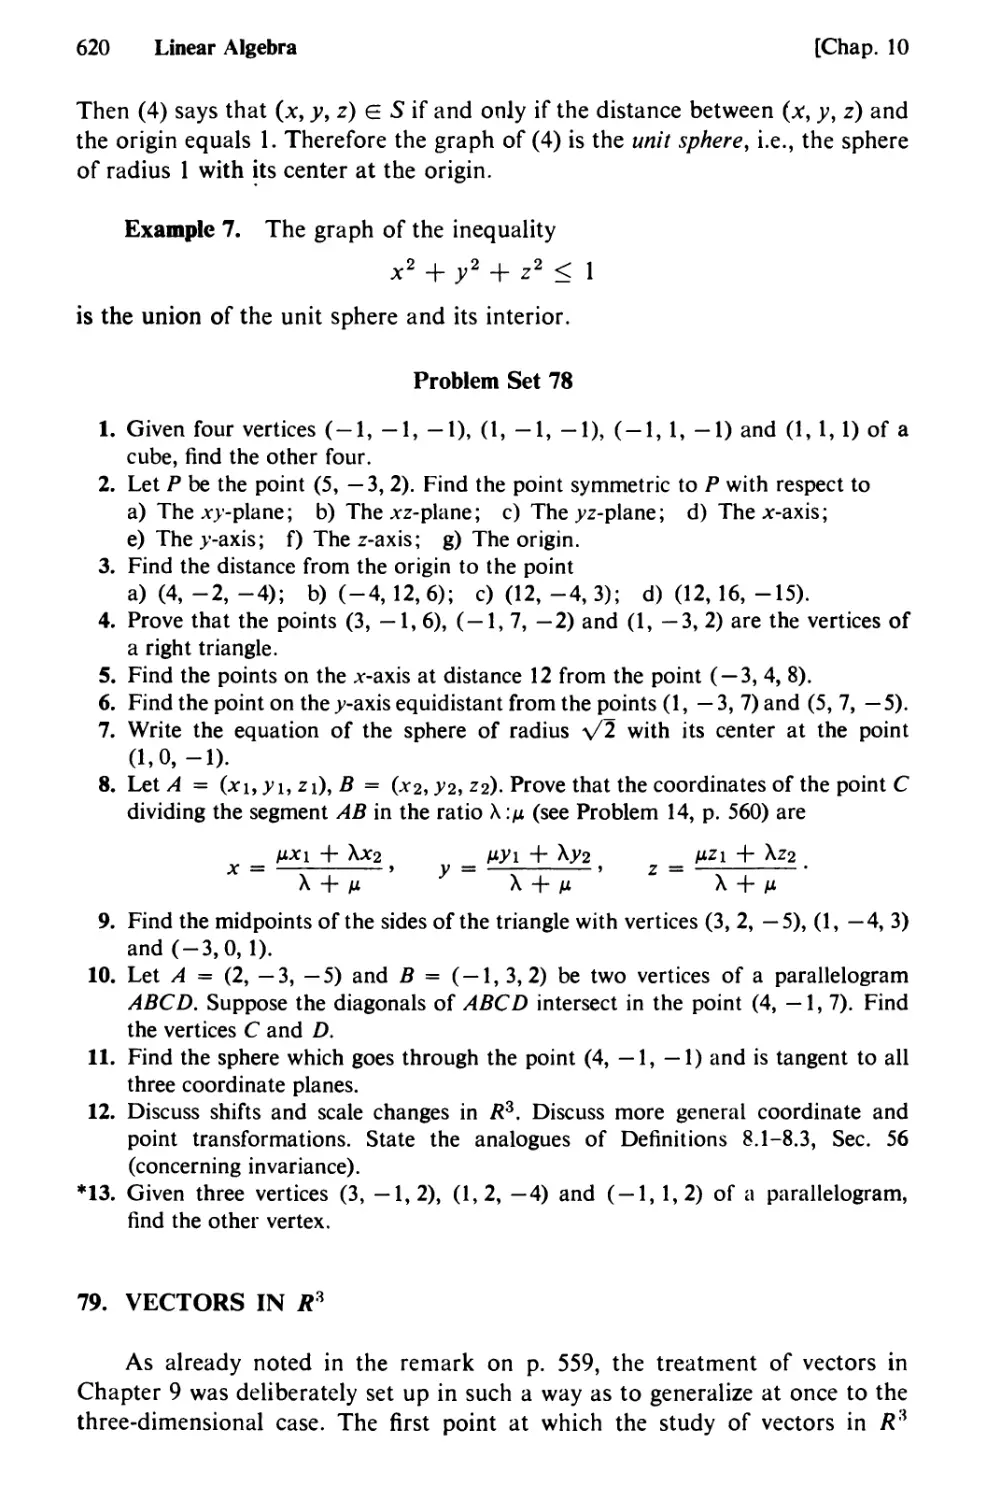 79. Vectors in R^3